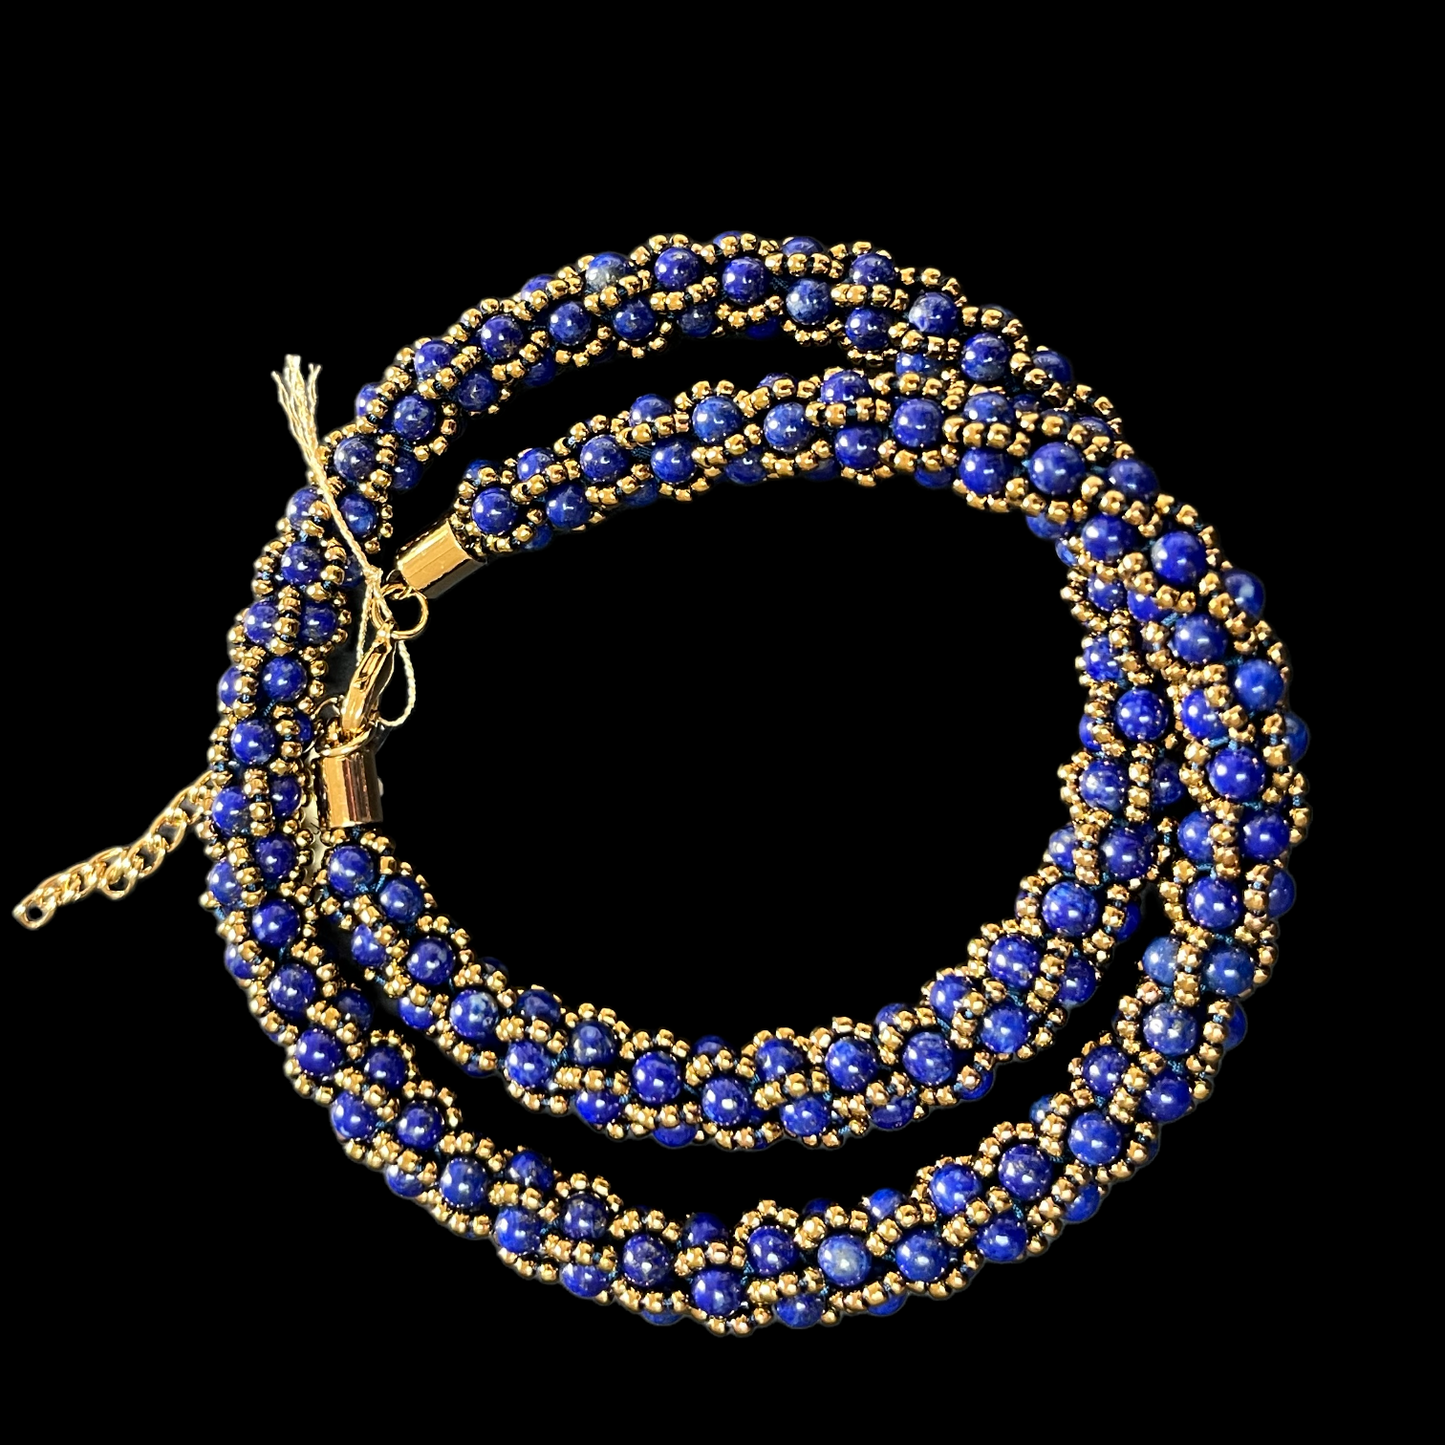 Crochet necklace in lapis lazuli and Miyuki beads, 49 cm